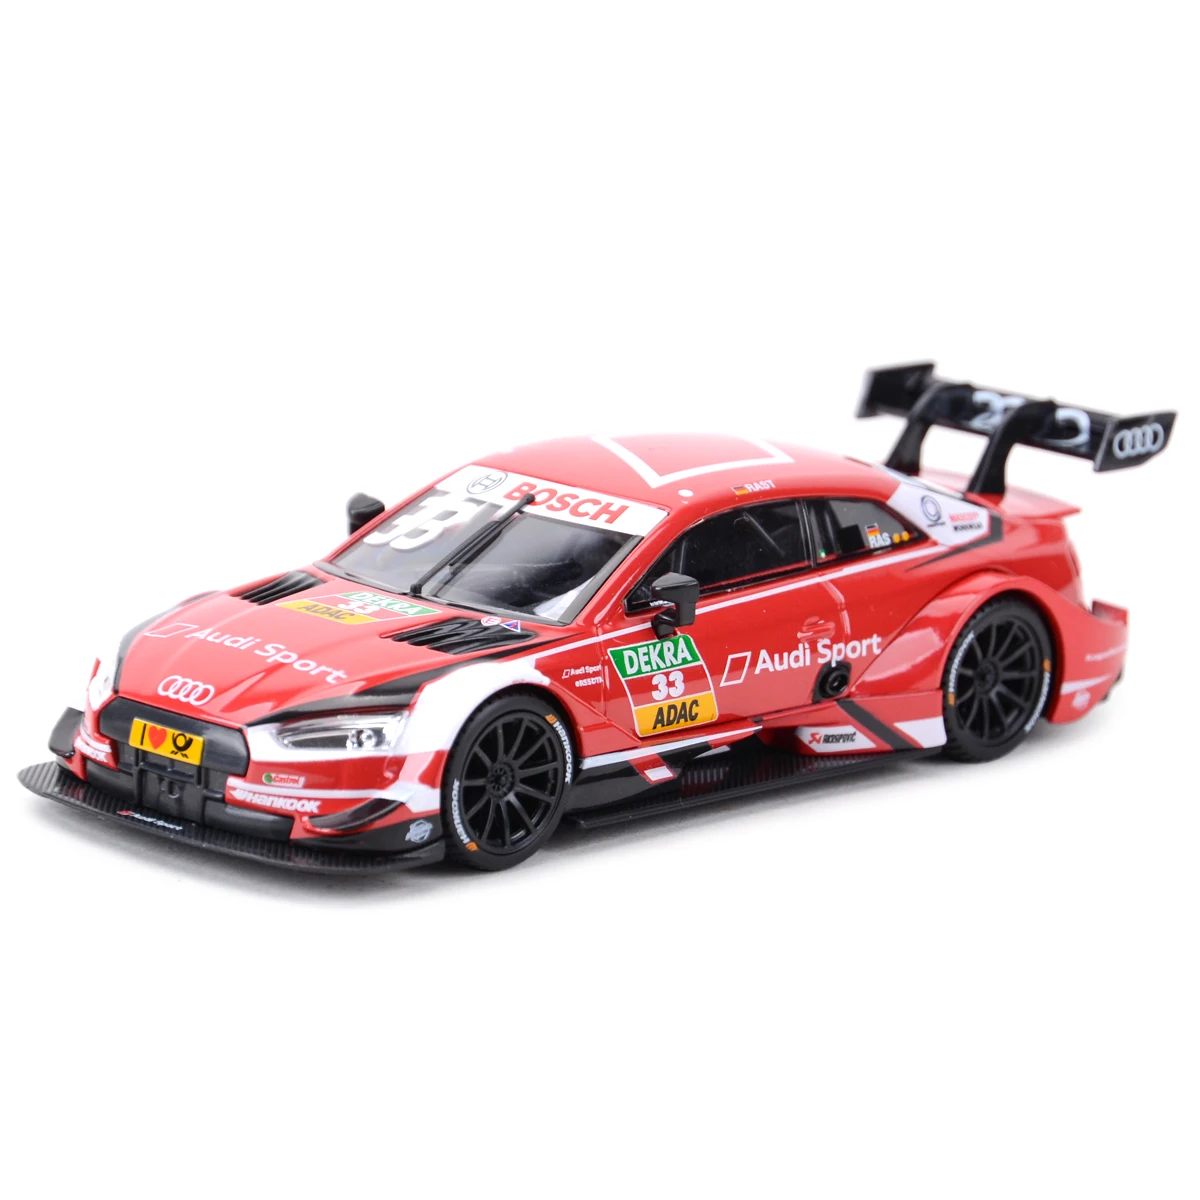 Bburago 1:32 2018 Audi Sport RS 5 DTM Static Die Cast Vehicles Collectible Model Car Toys